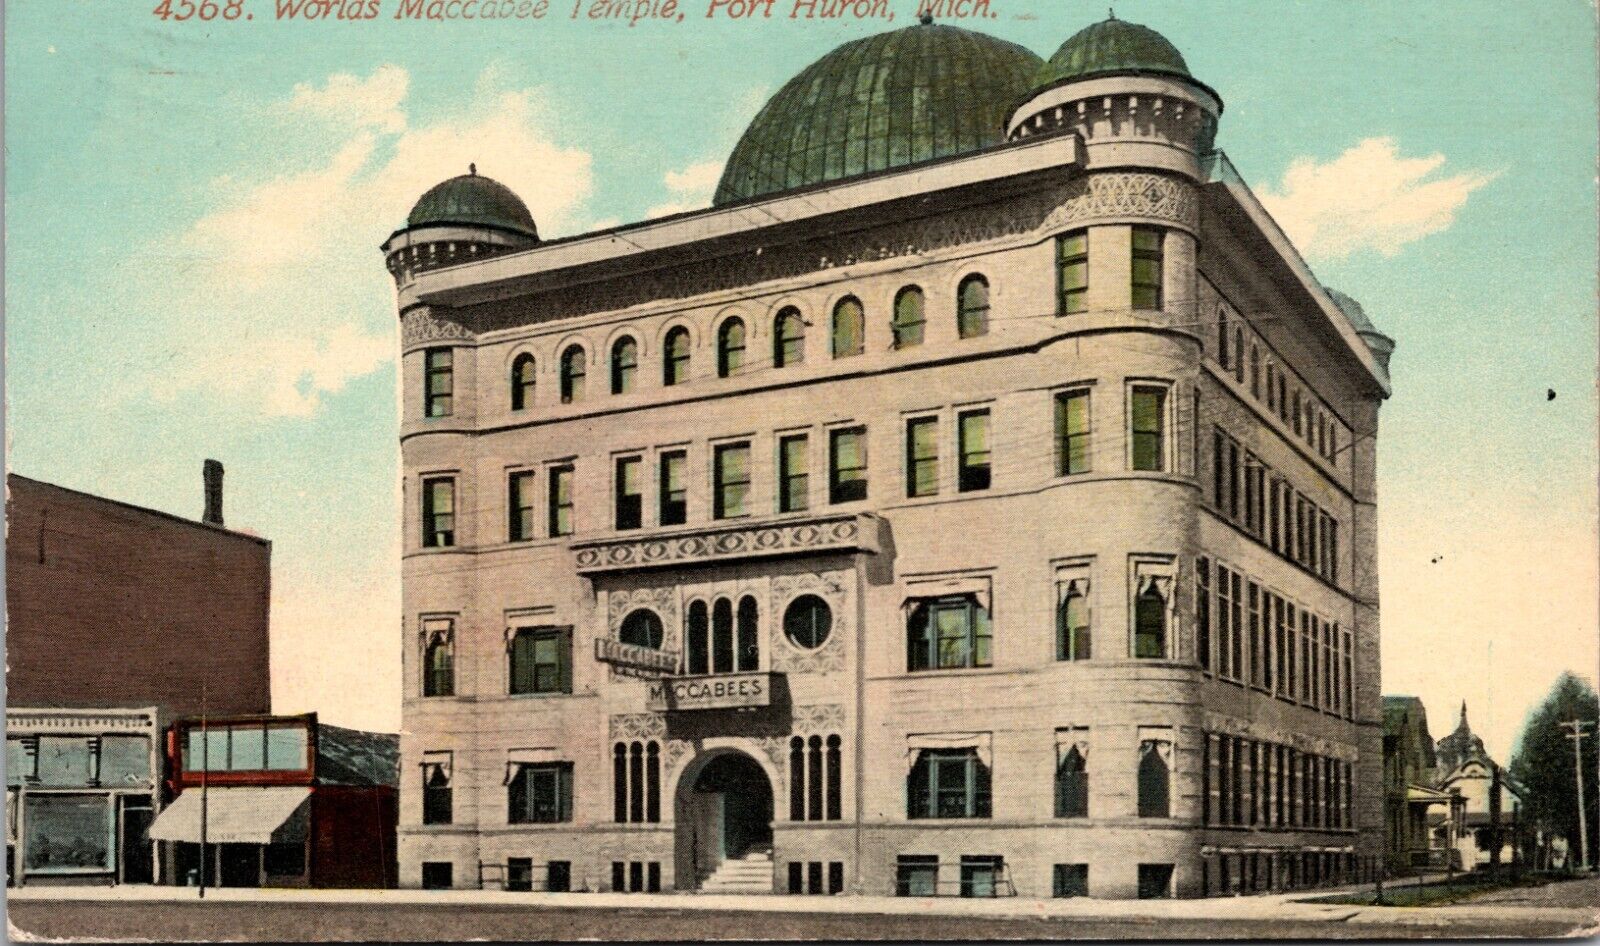 1913 Port Huron Michigan MI Worlds Maccabee Temple Vintage Postcard L56